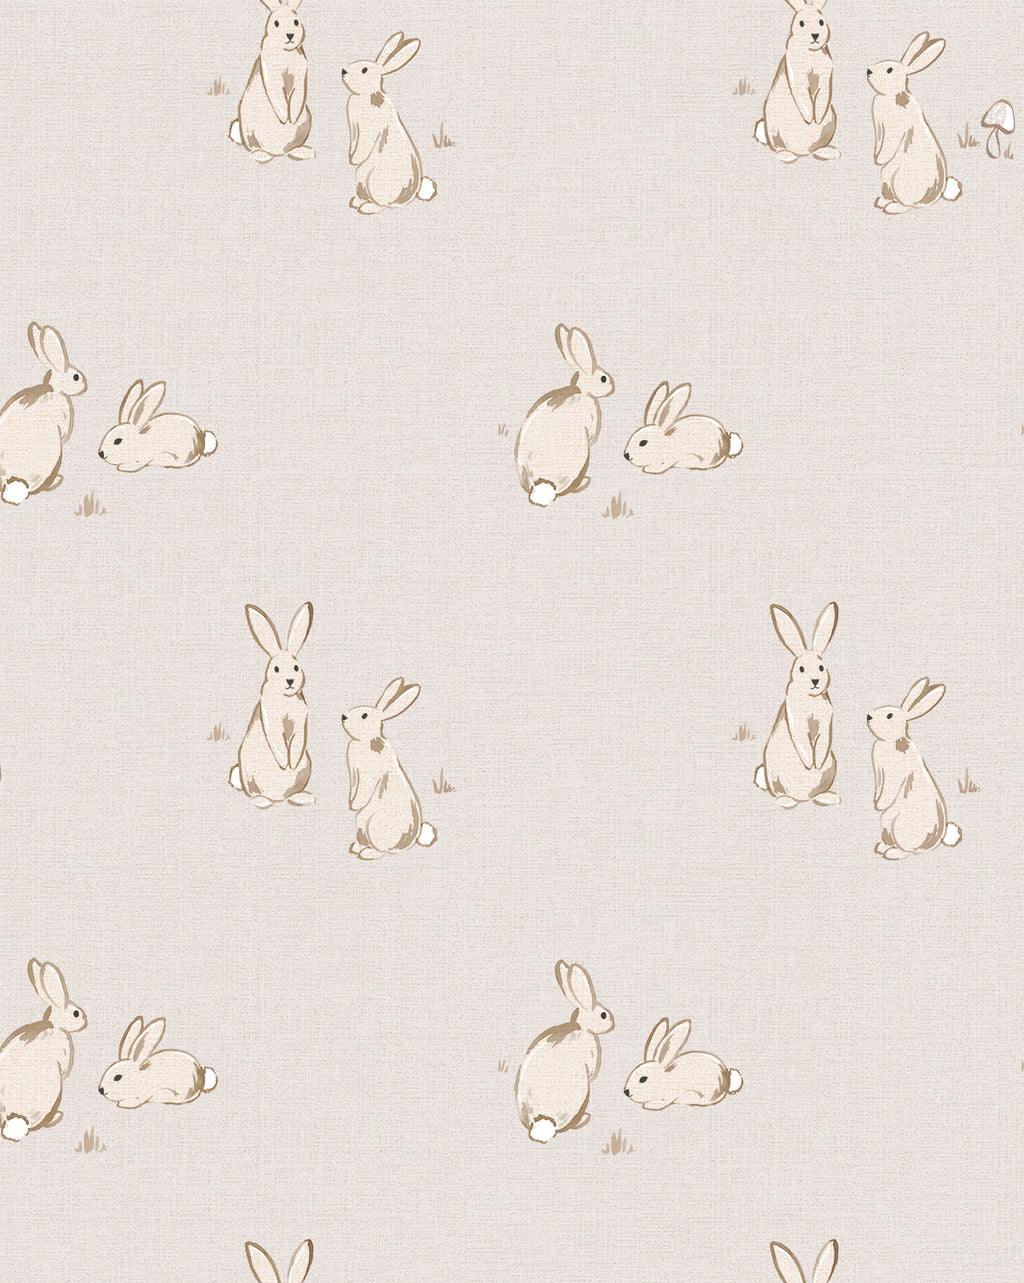 bunny wallpaper